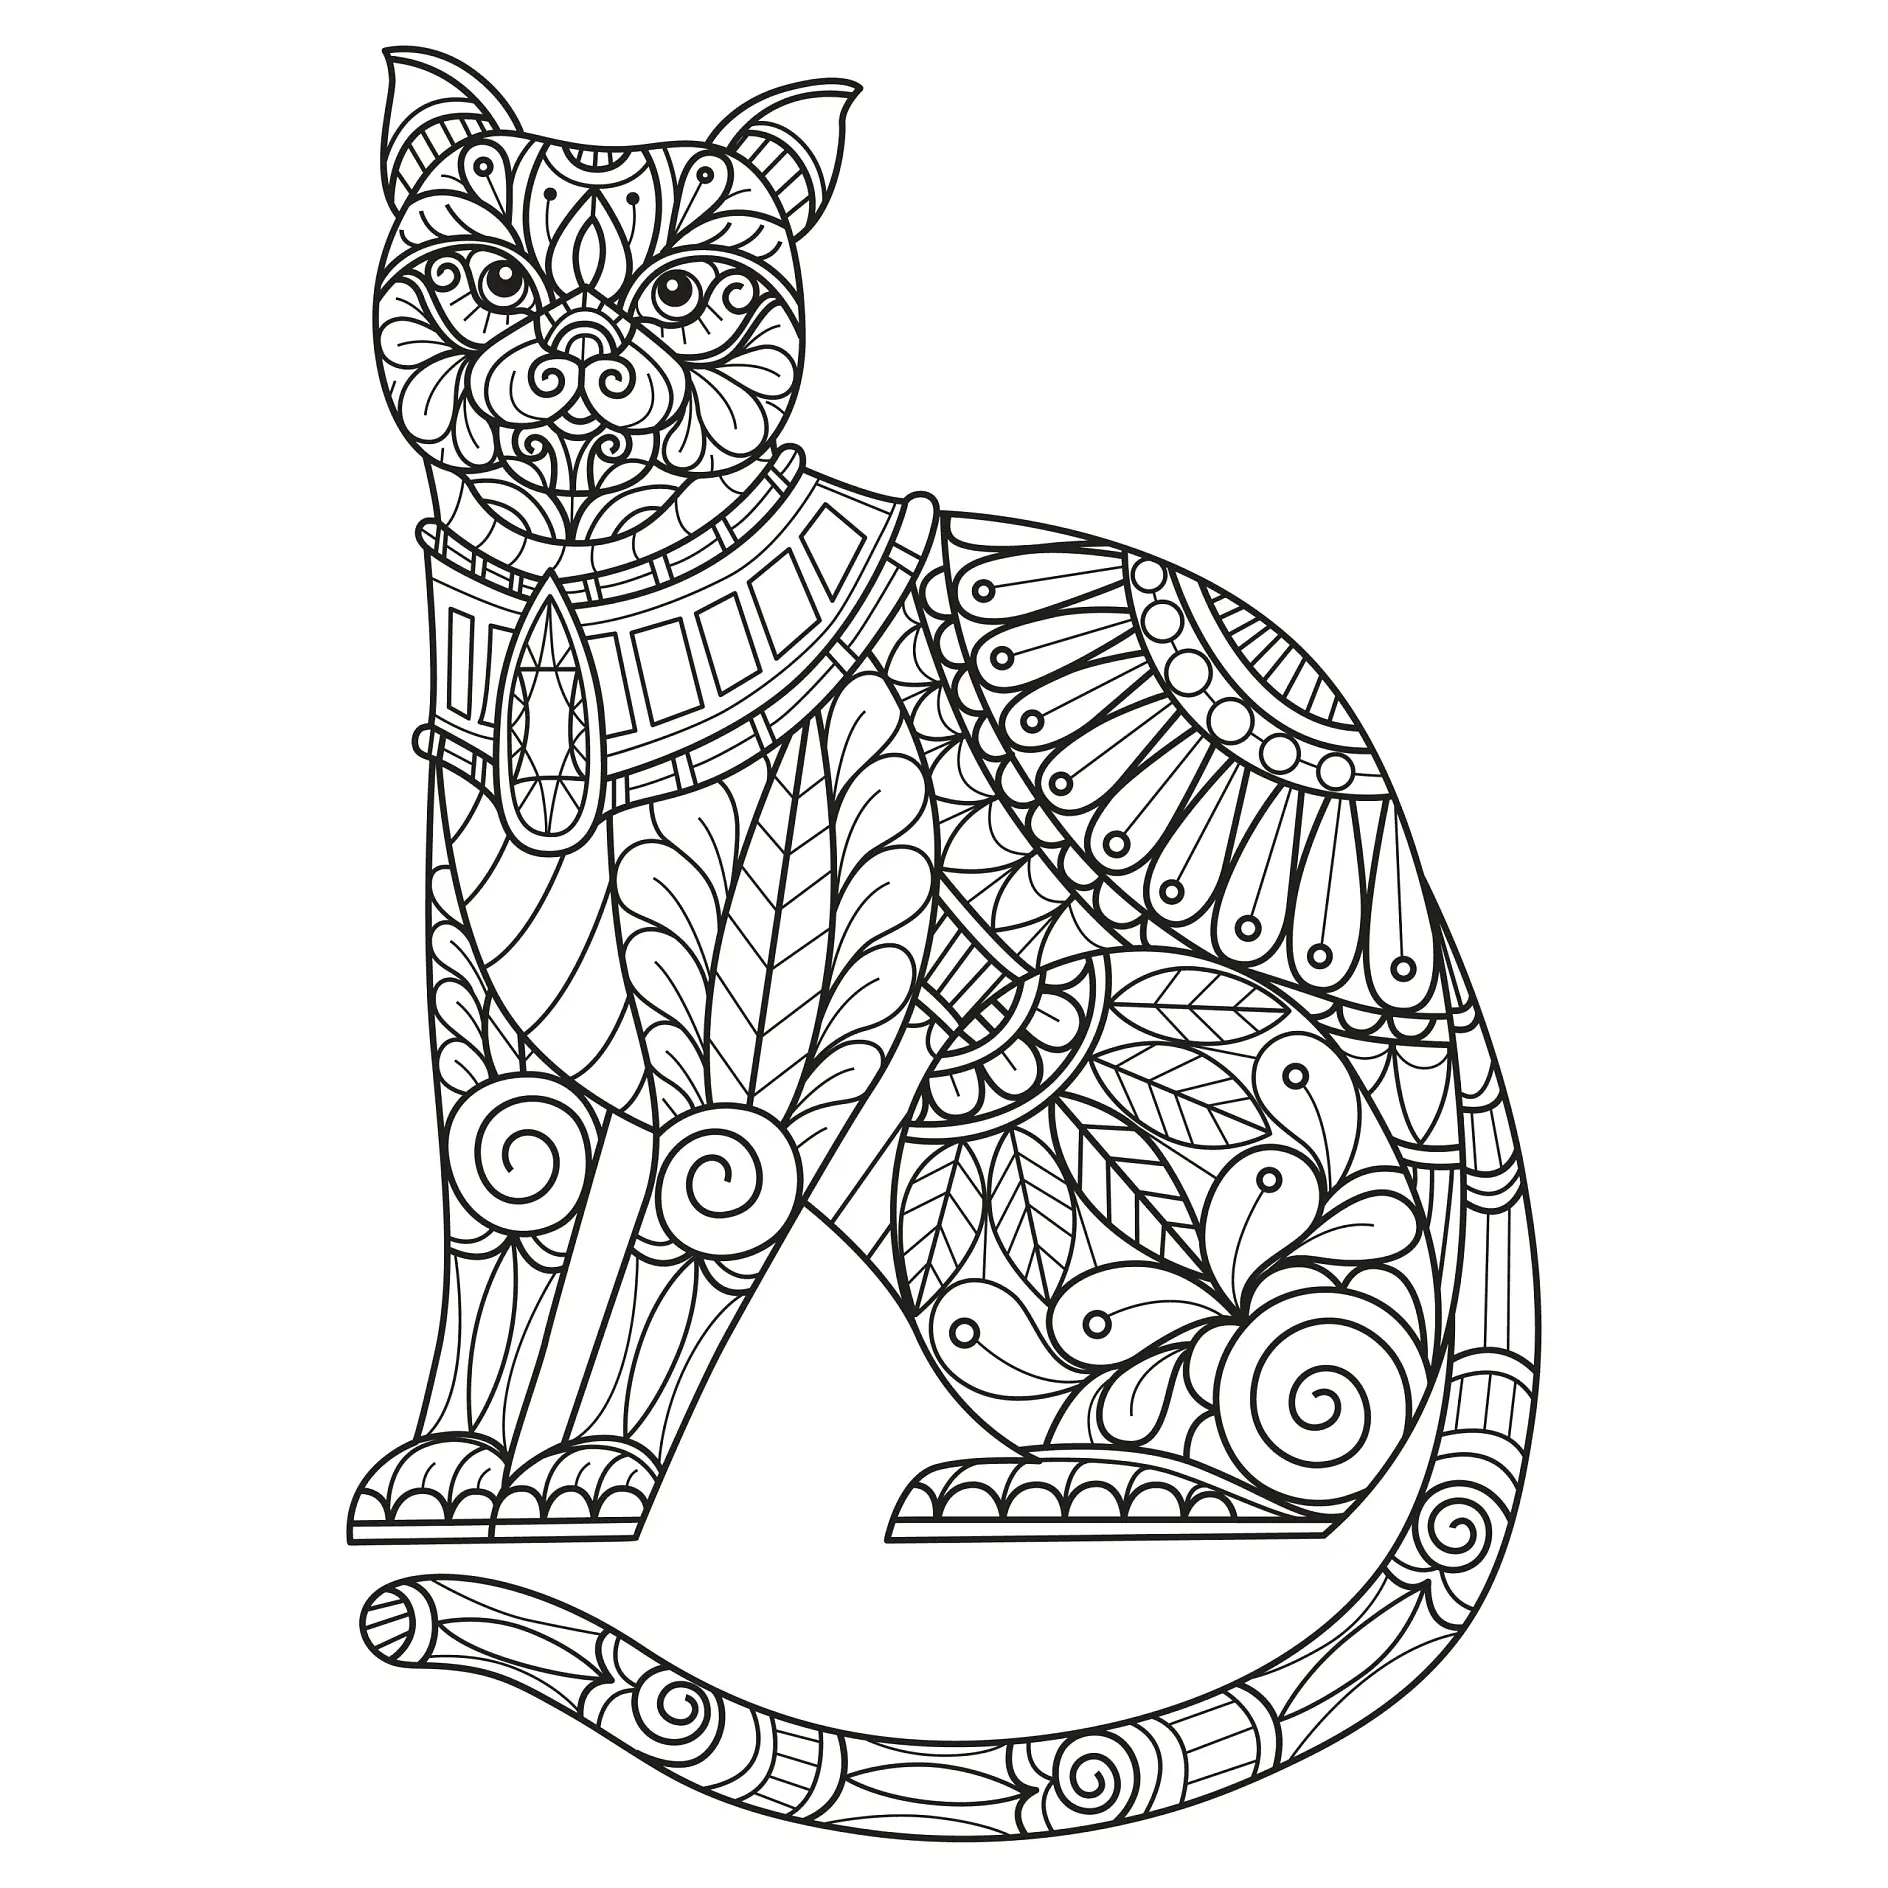 Ausmalbild Mandala mit Katze und detaillierten Ornamenten